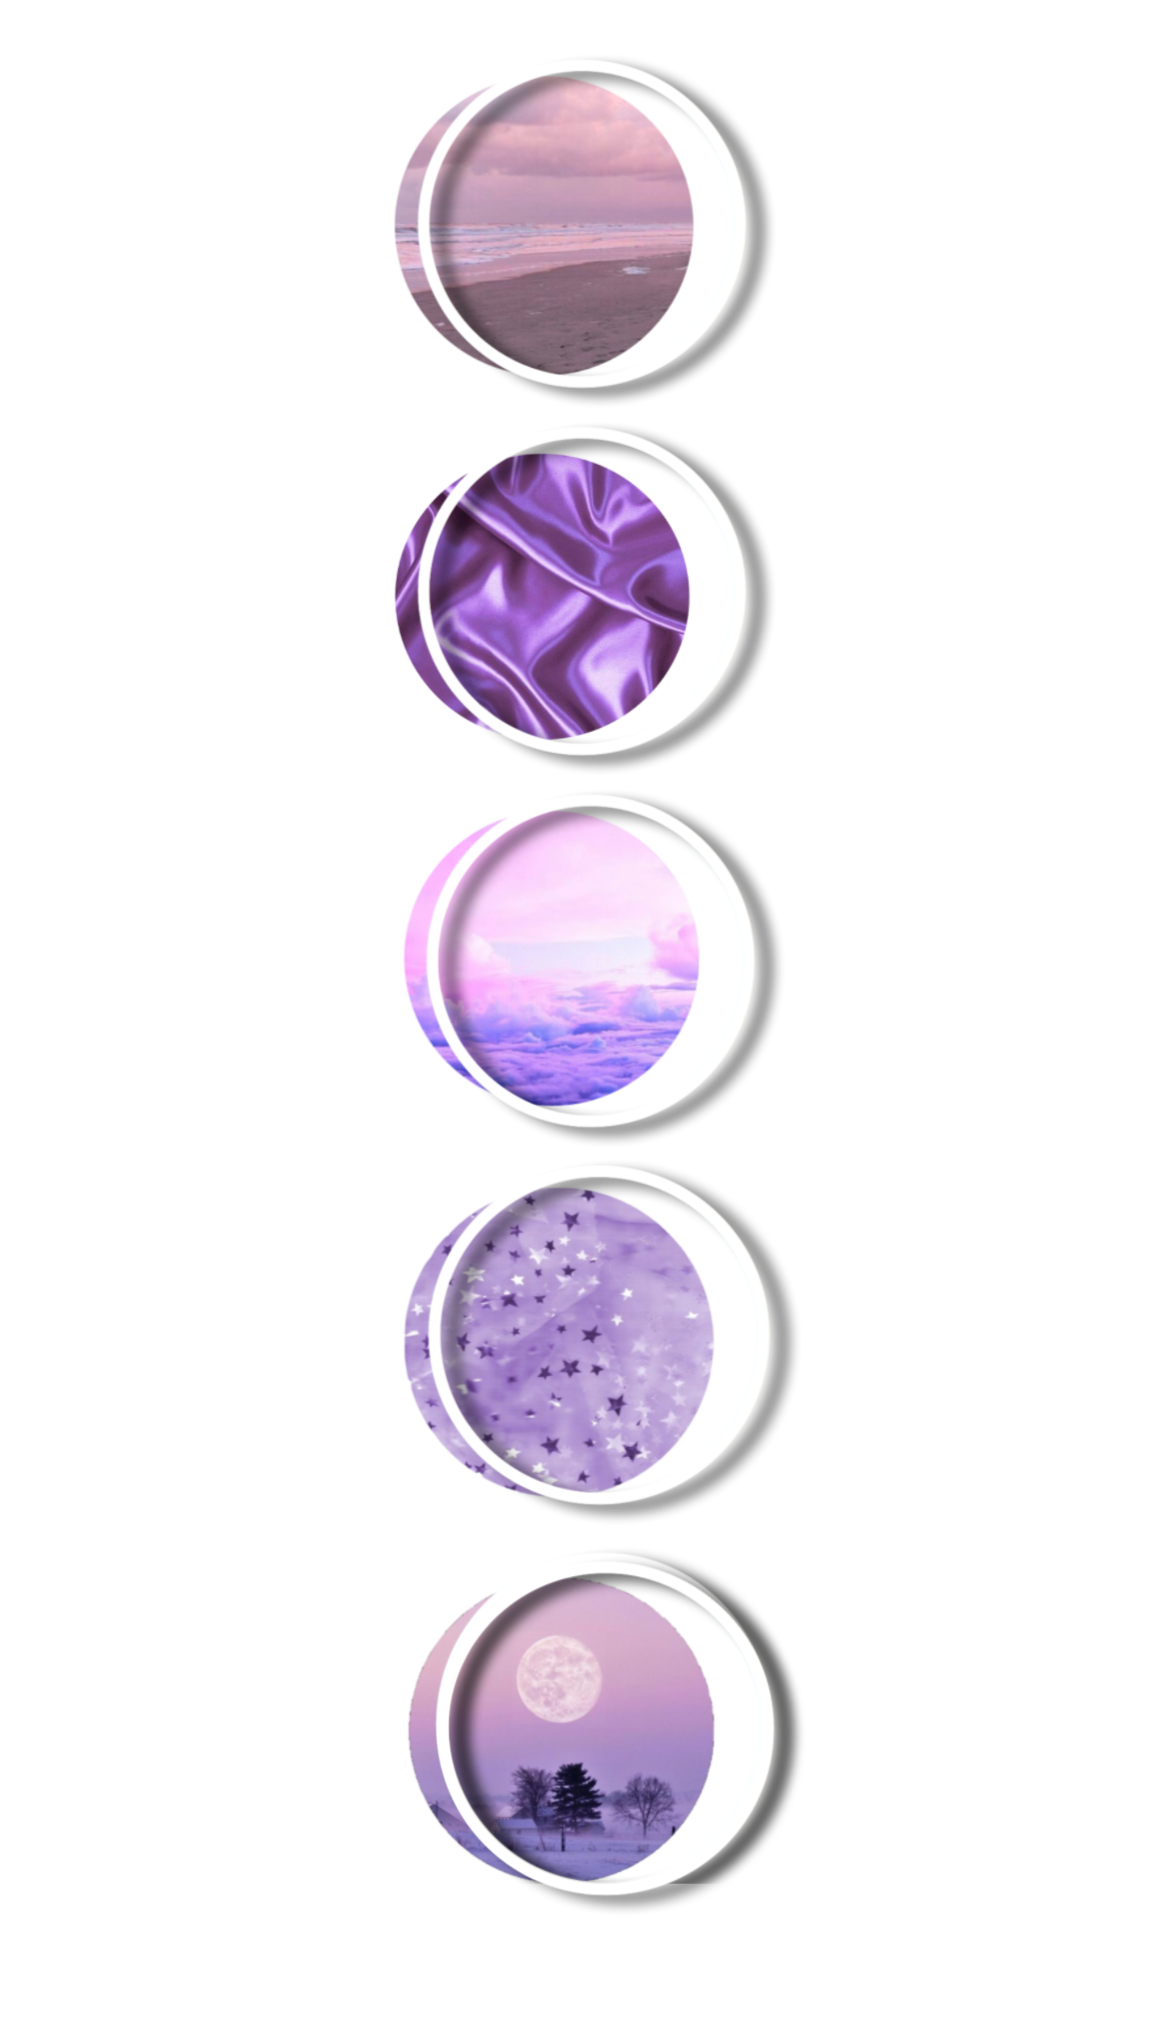 freetoedit purple aesthetic circle sticker by @zoesosaduque